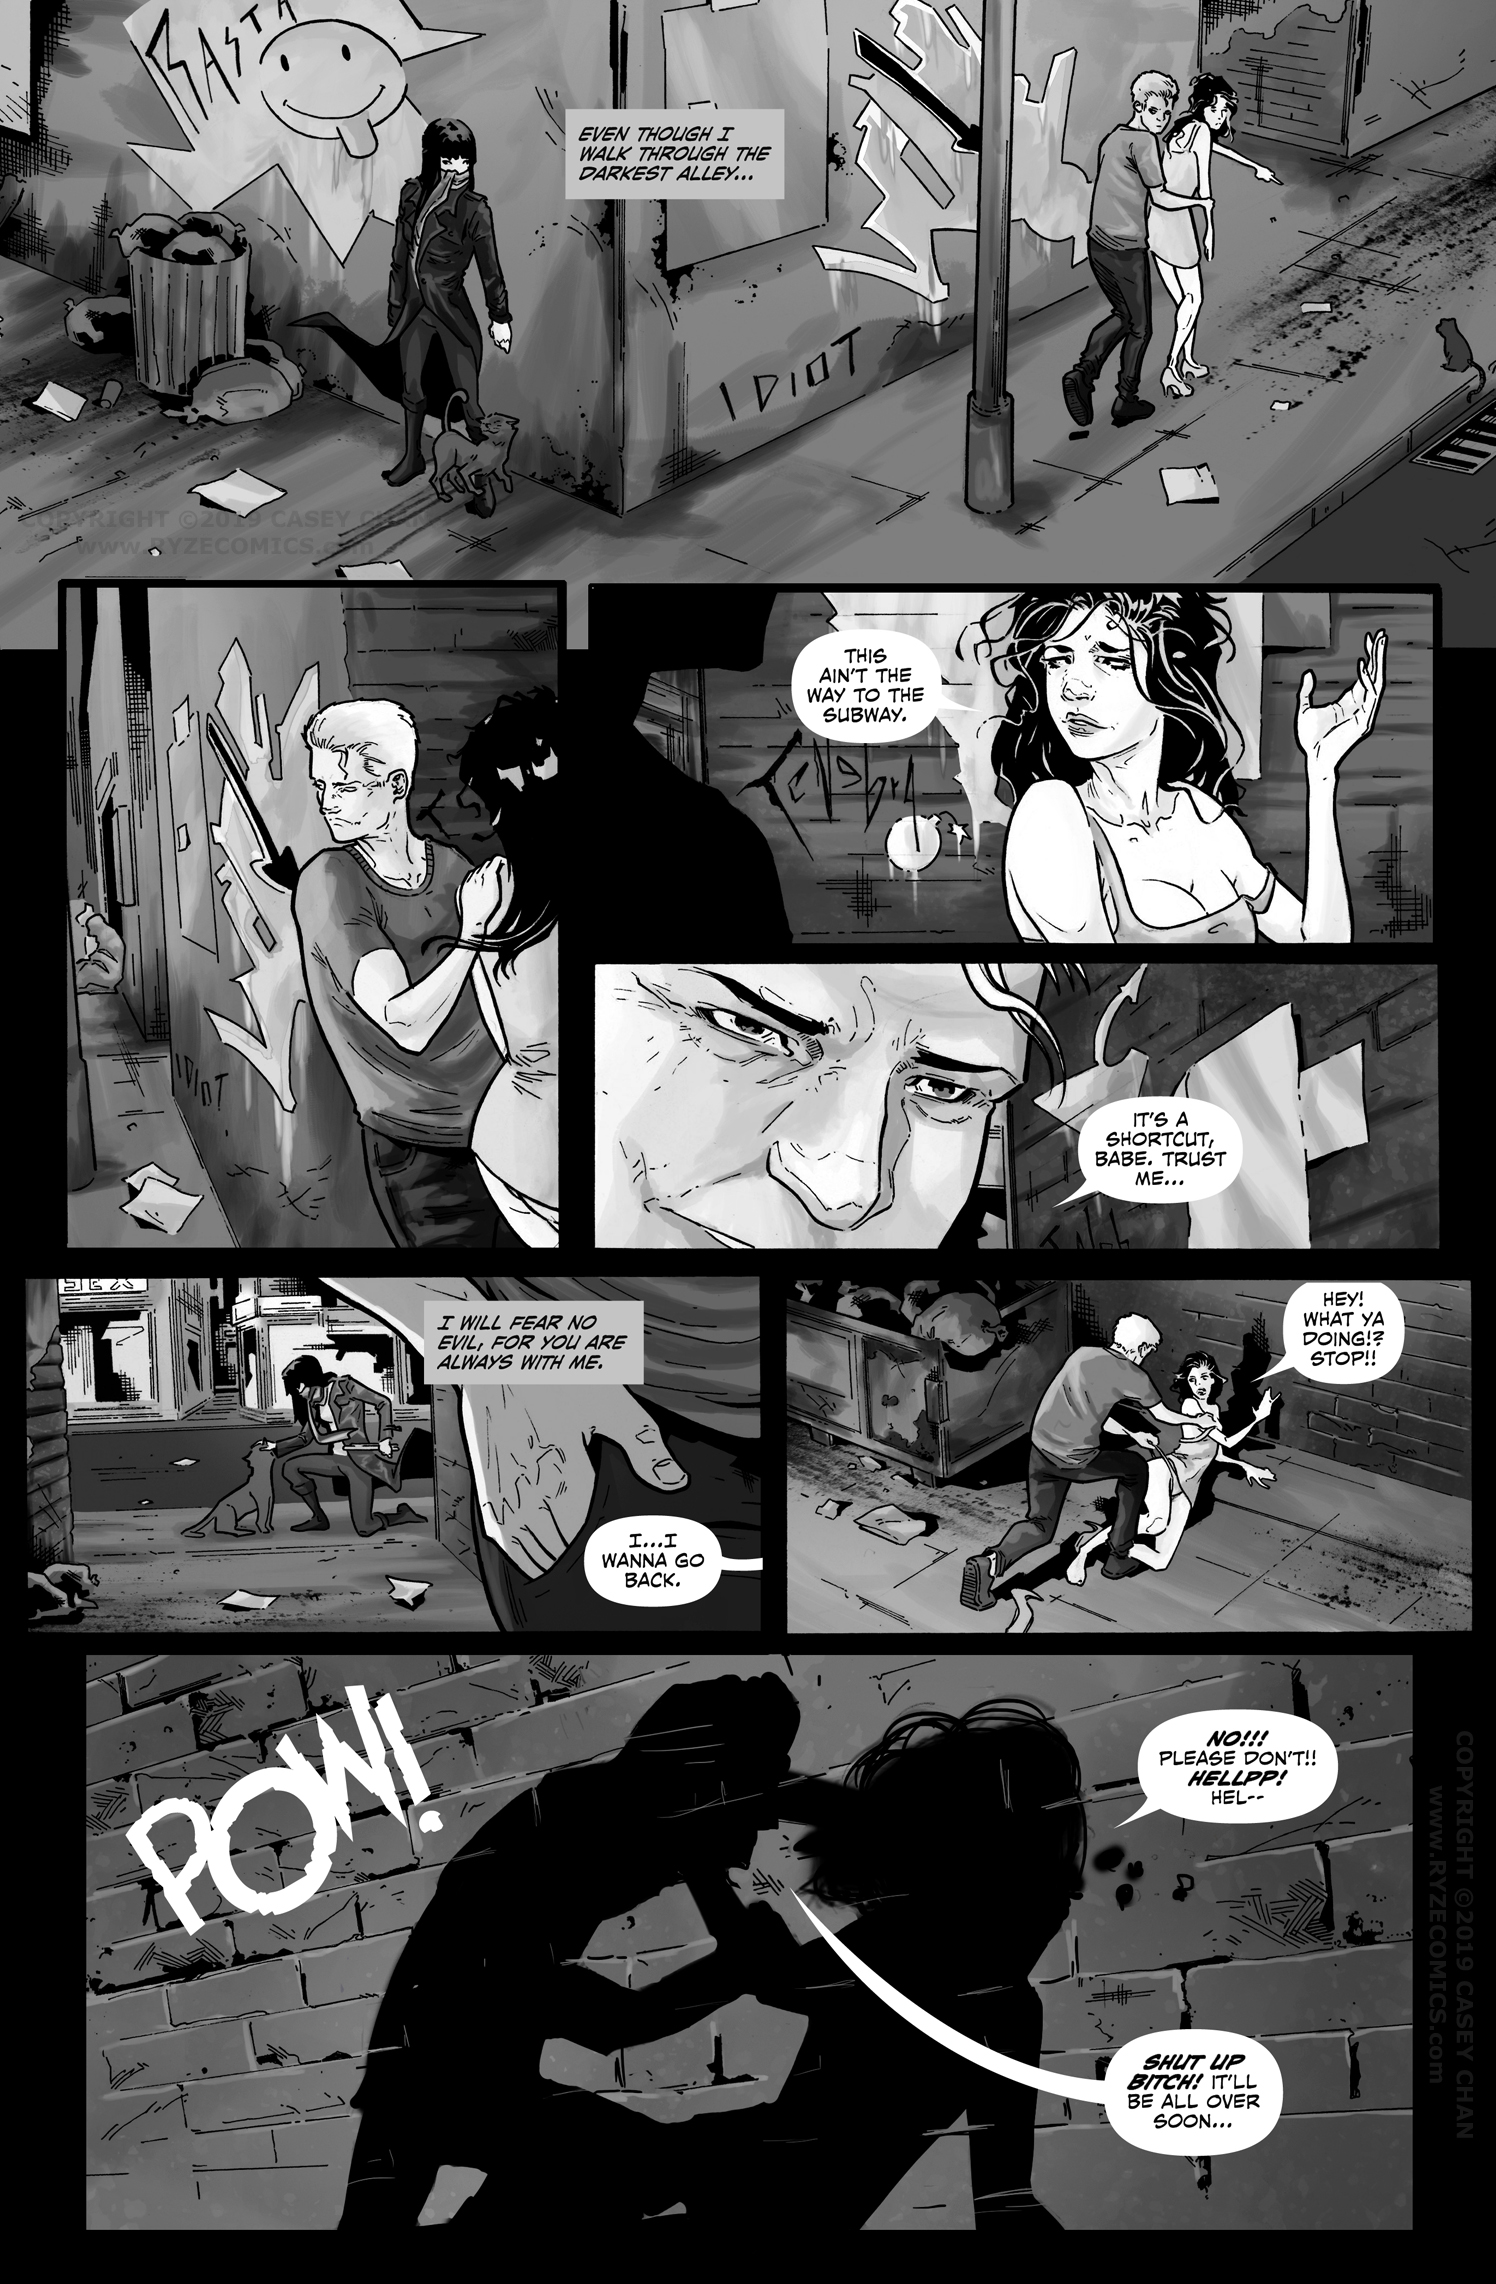 SISTER - Ryze Comics - Feb2019200 - pg3 BW.jpg